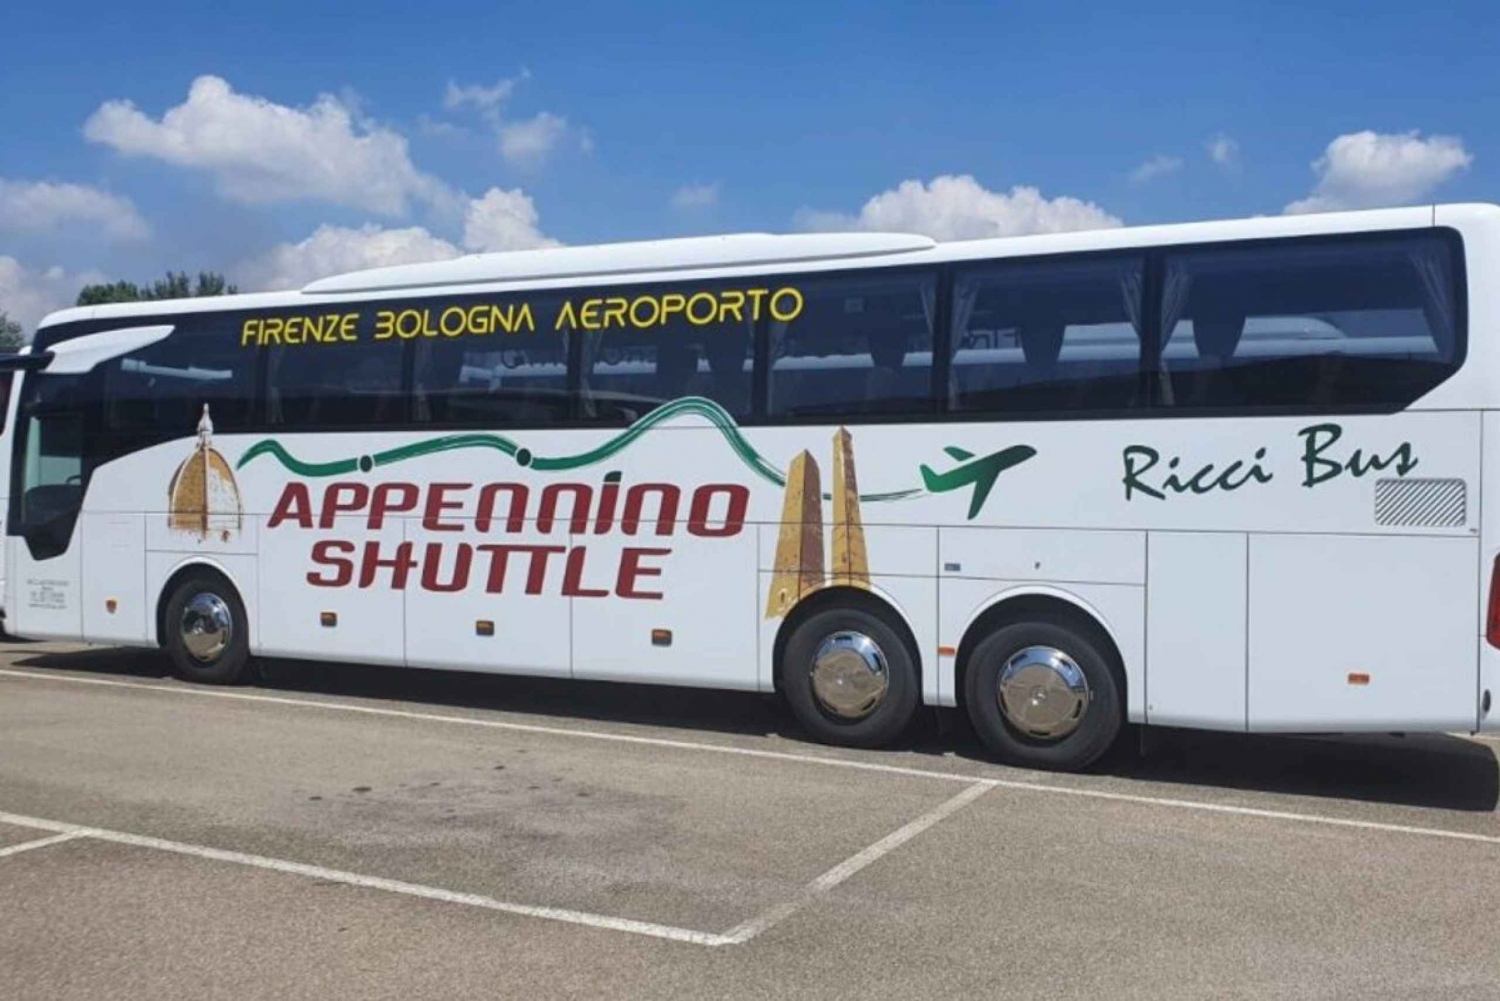 Bolonia: transfer autobusem z lotniska Marconi do/z Florencji